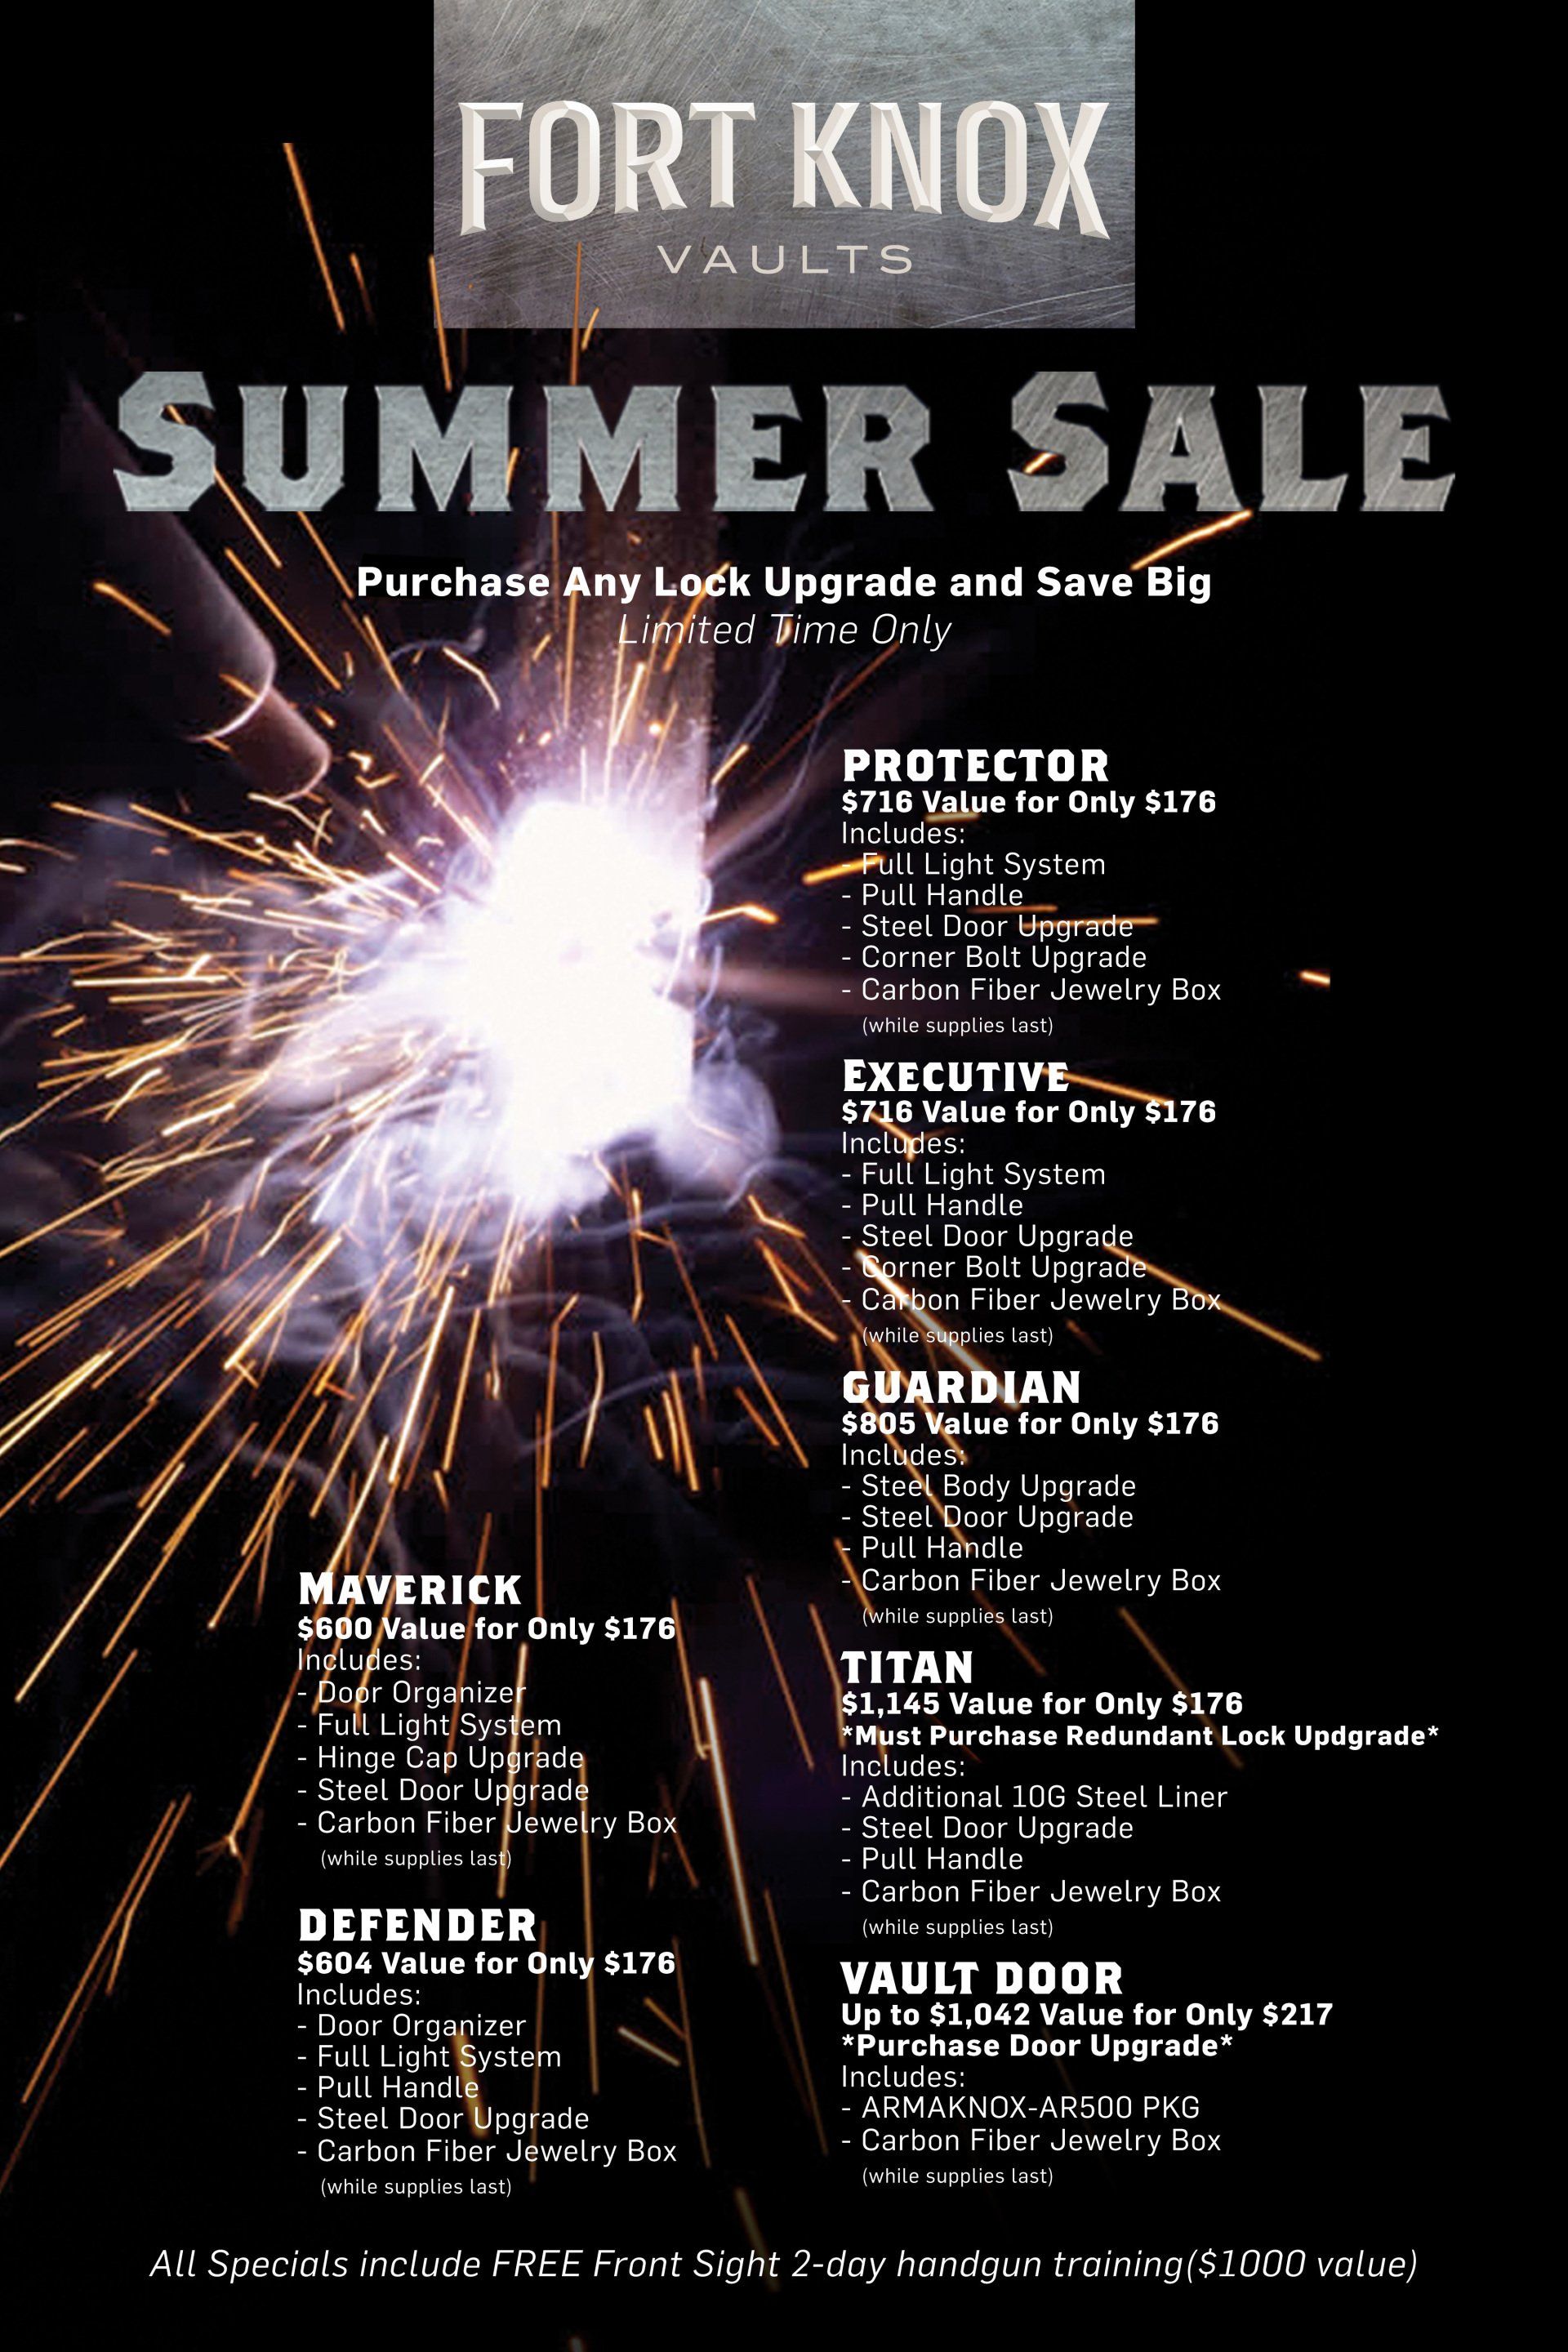 Fort Knox Summer Sale